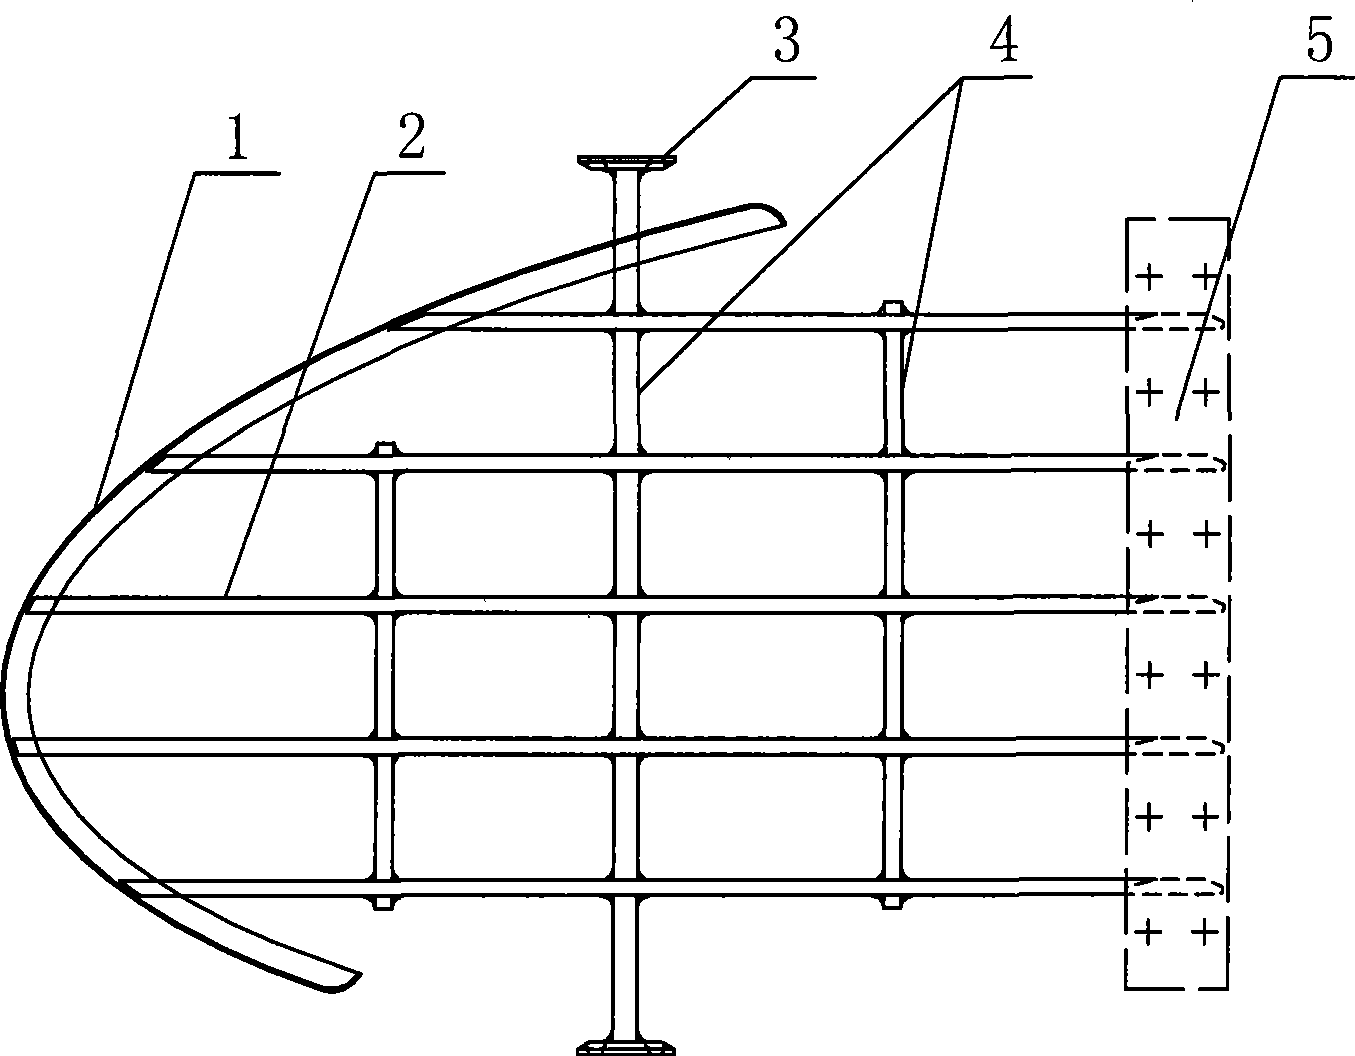 Assembling and welding technique of ship water-jet propulsion flow-passage grid